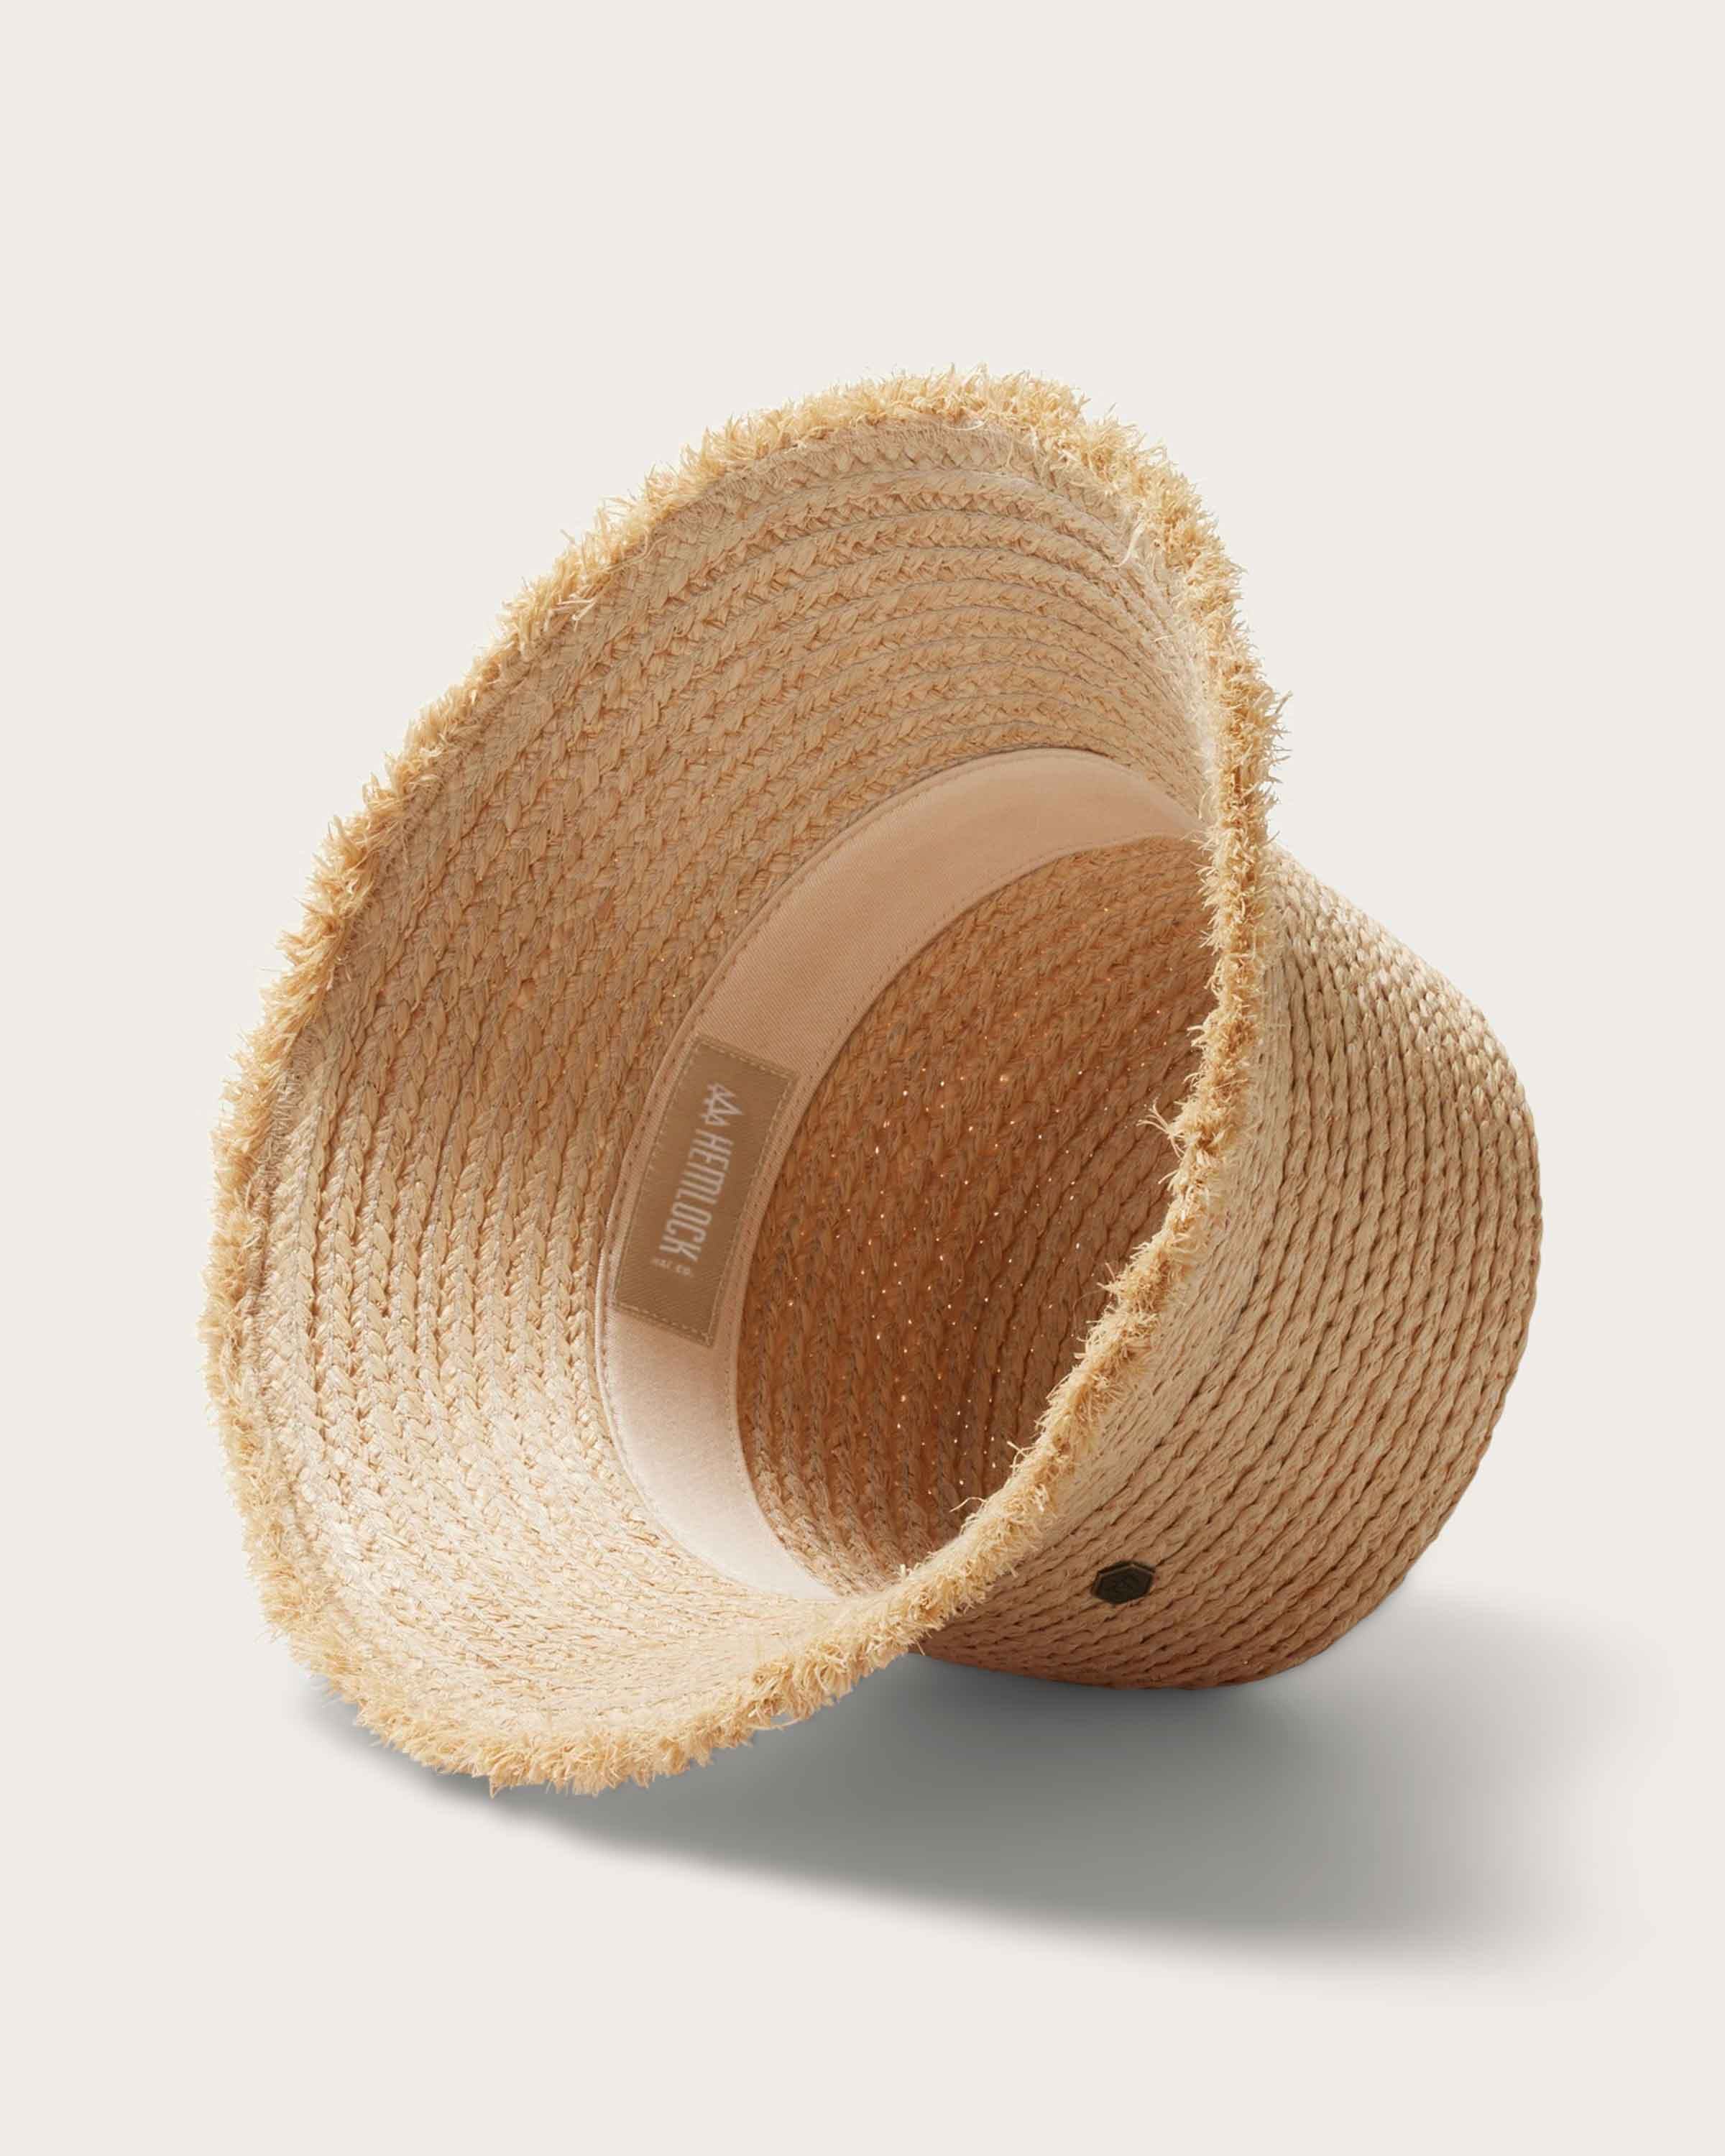 Lenny Bucket in Natural - undefined - Hemlock Hat Co. Straw Bucket Hats